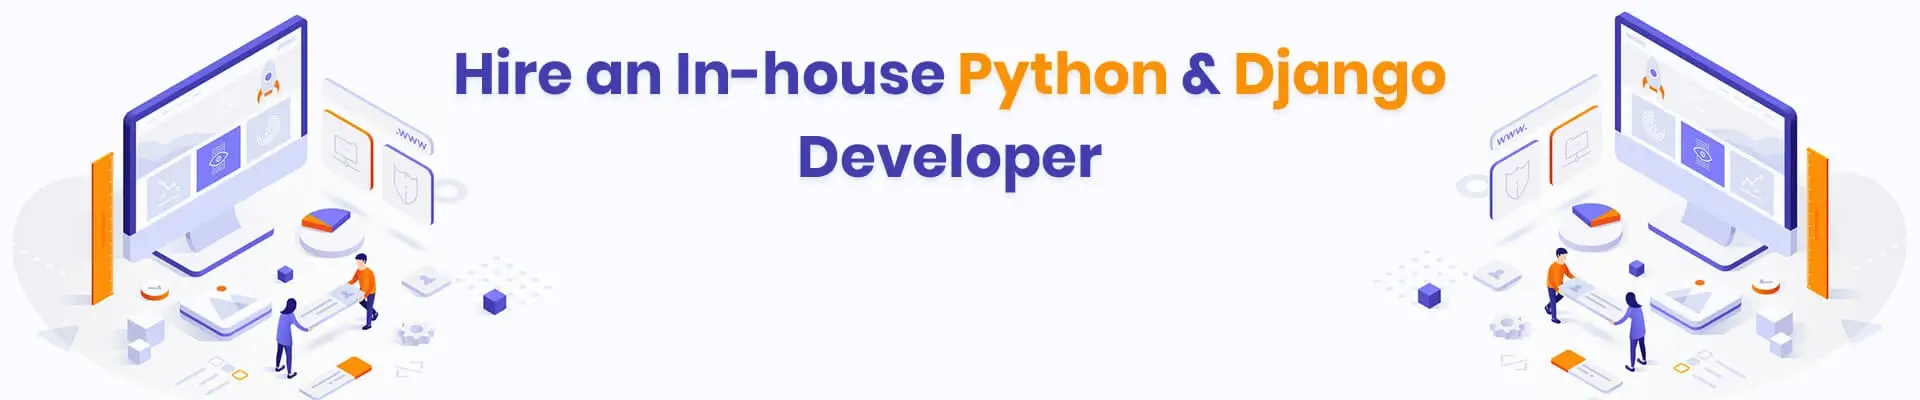 Hire an In-house Python & Django Developer [Ultimate Guide on Hiring In-house Python/Django Developers]